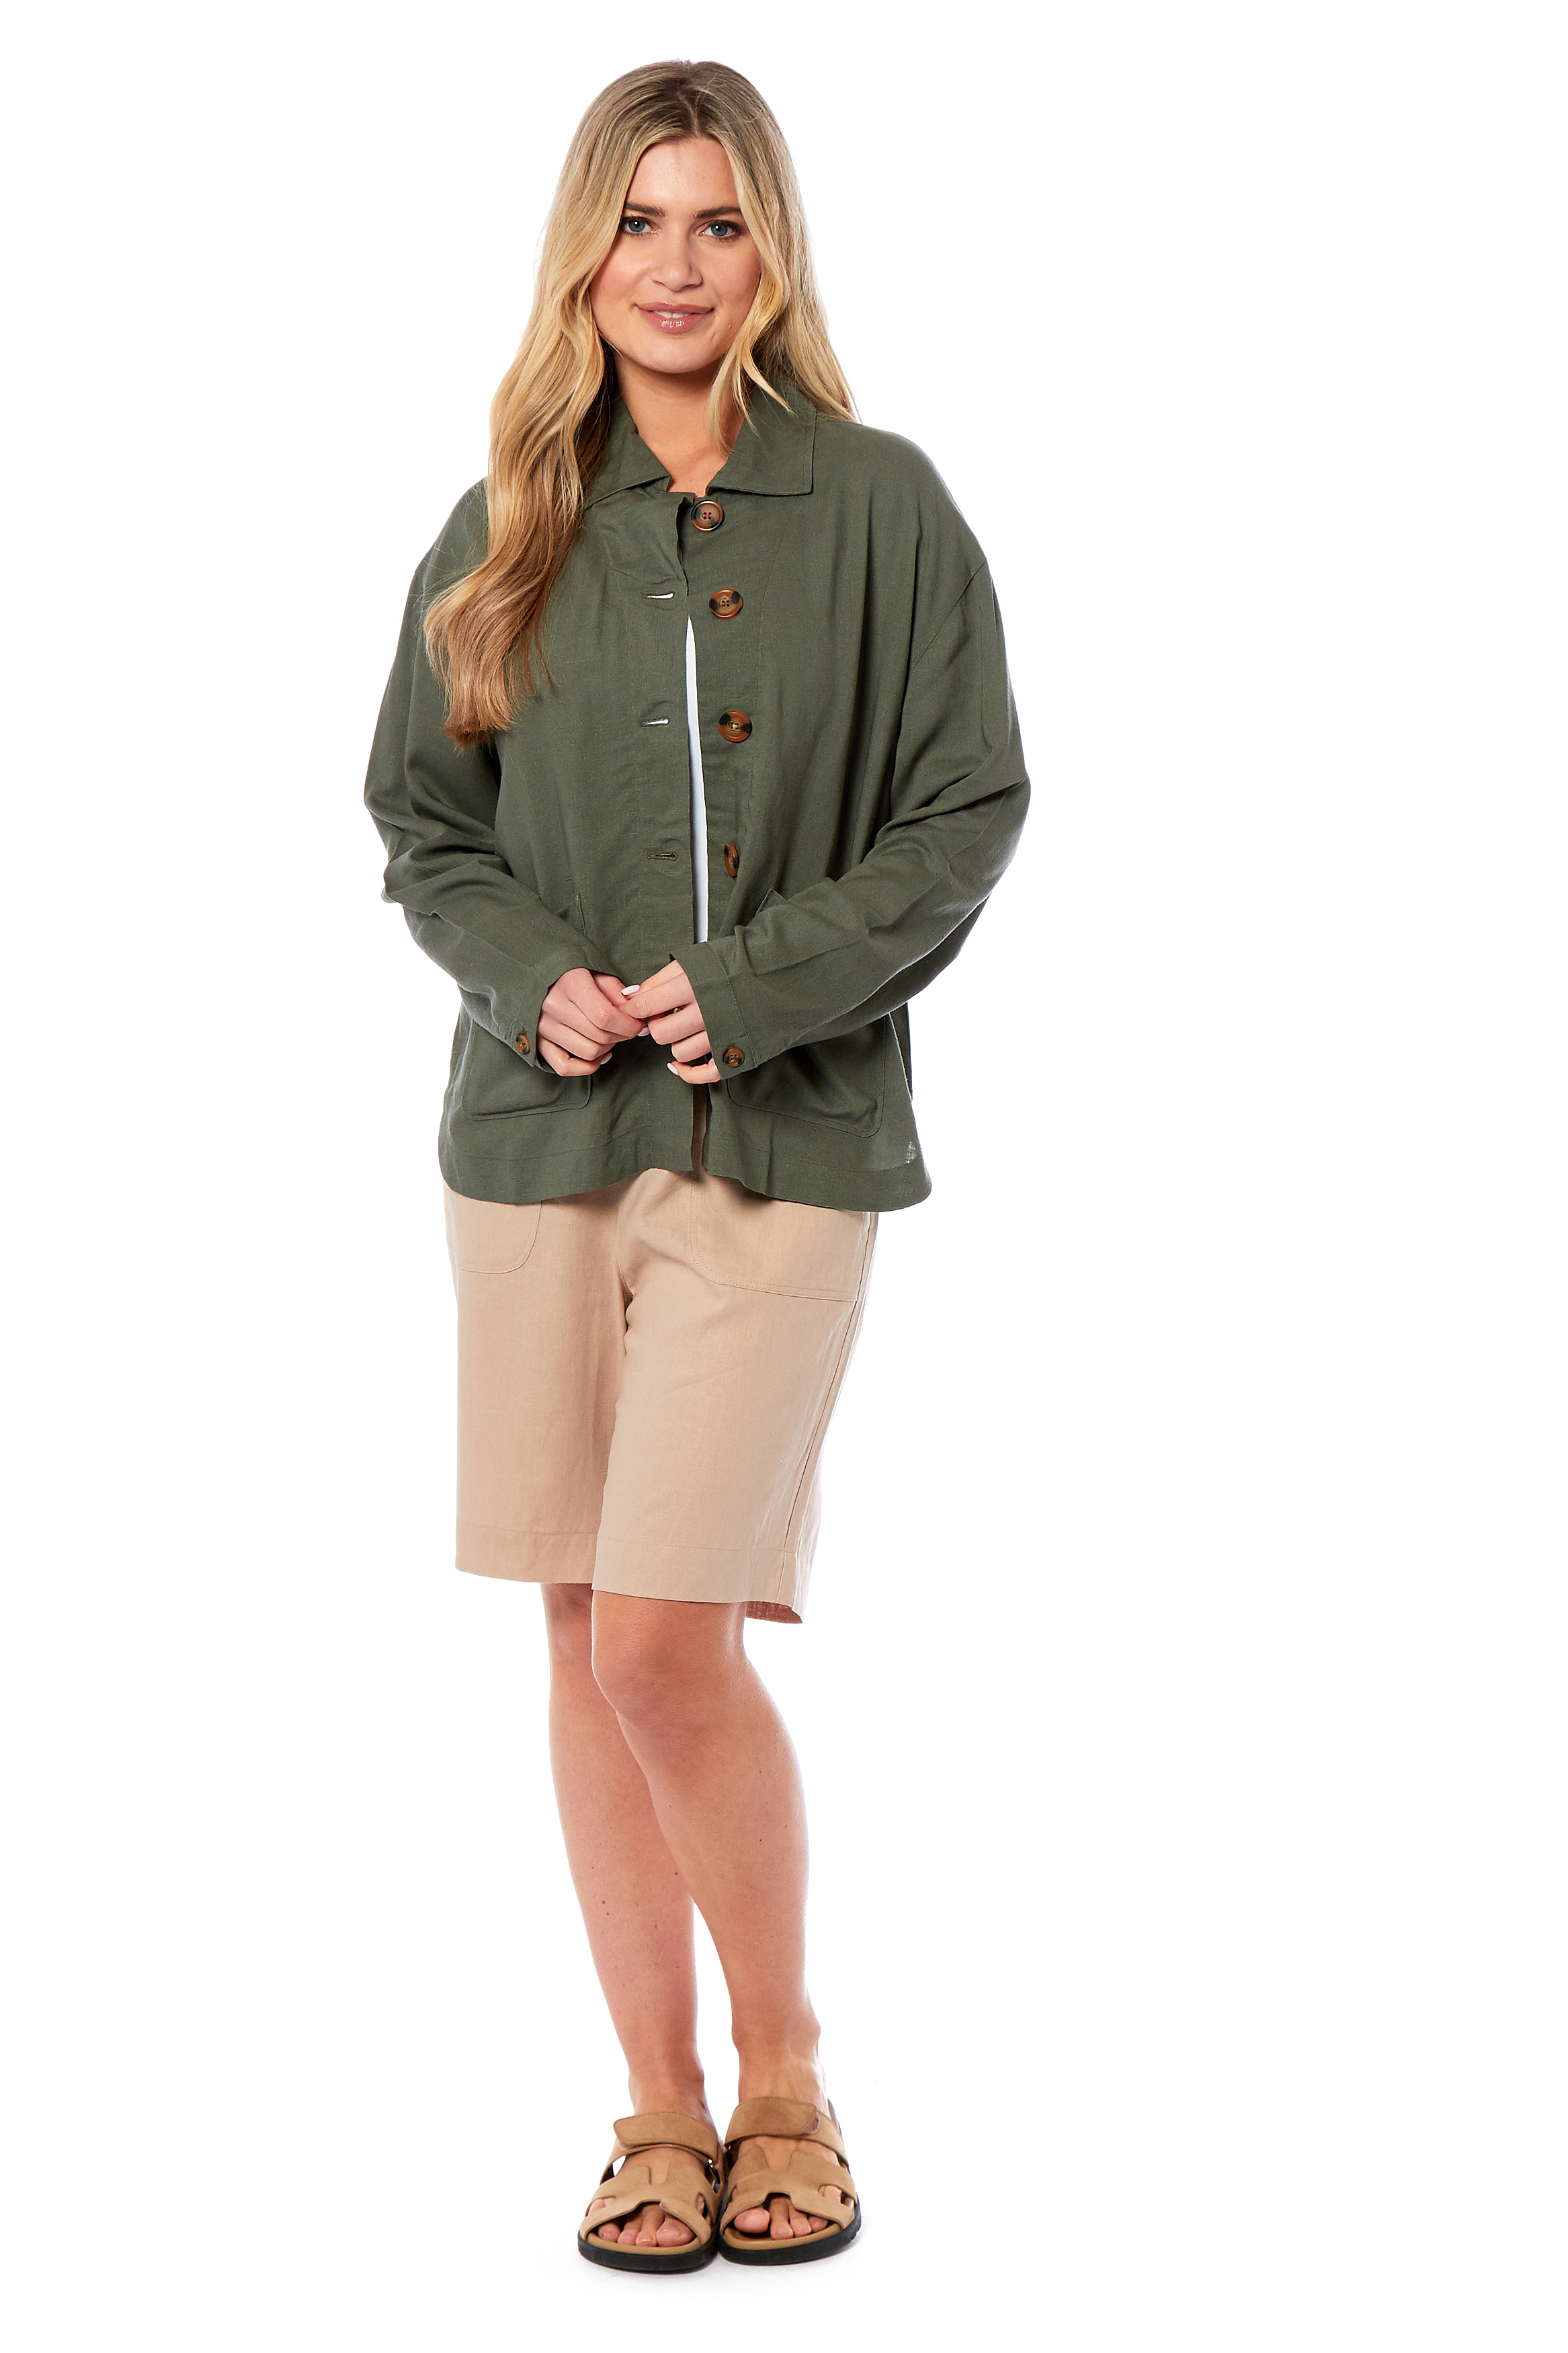 Charlotte West Ladies Linen Jacket (Size 14) - Khaki